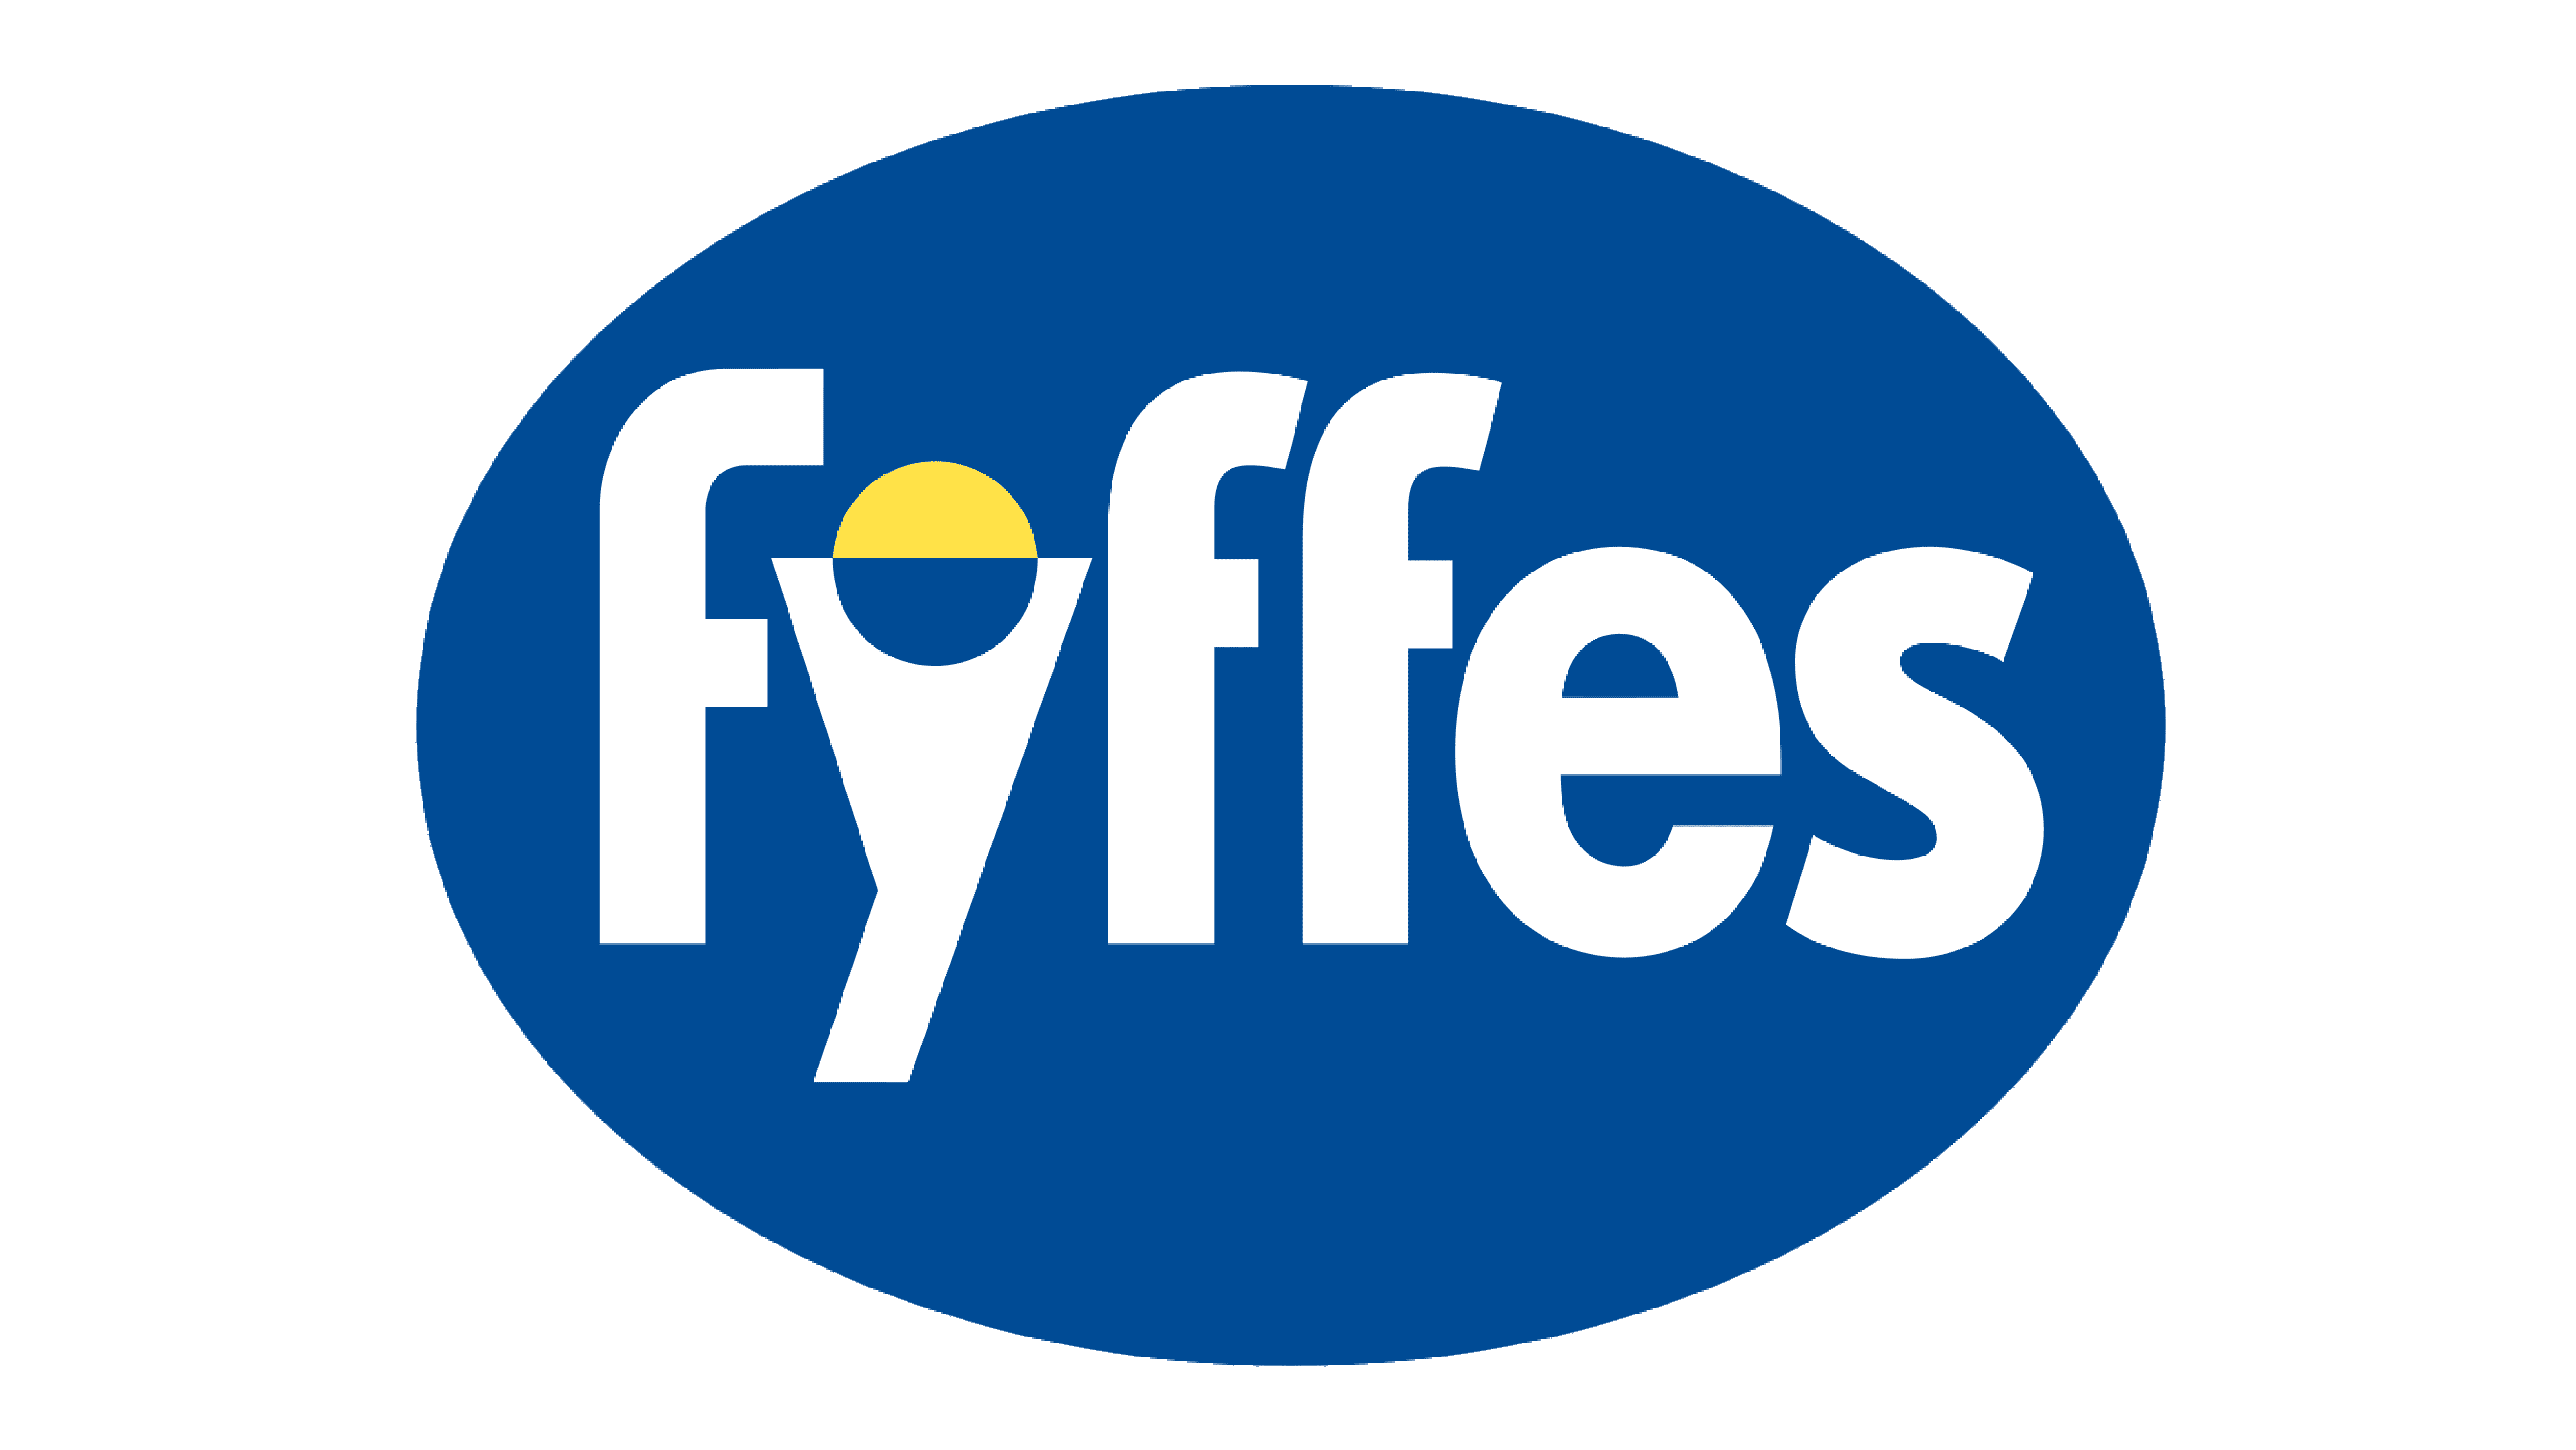 Logotipo de Fyffe Logo